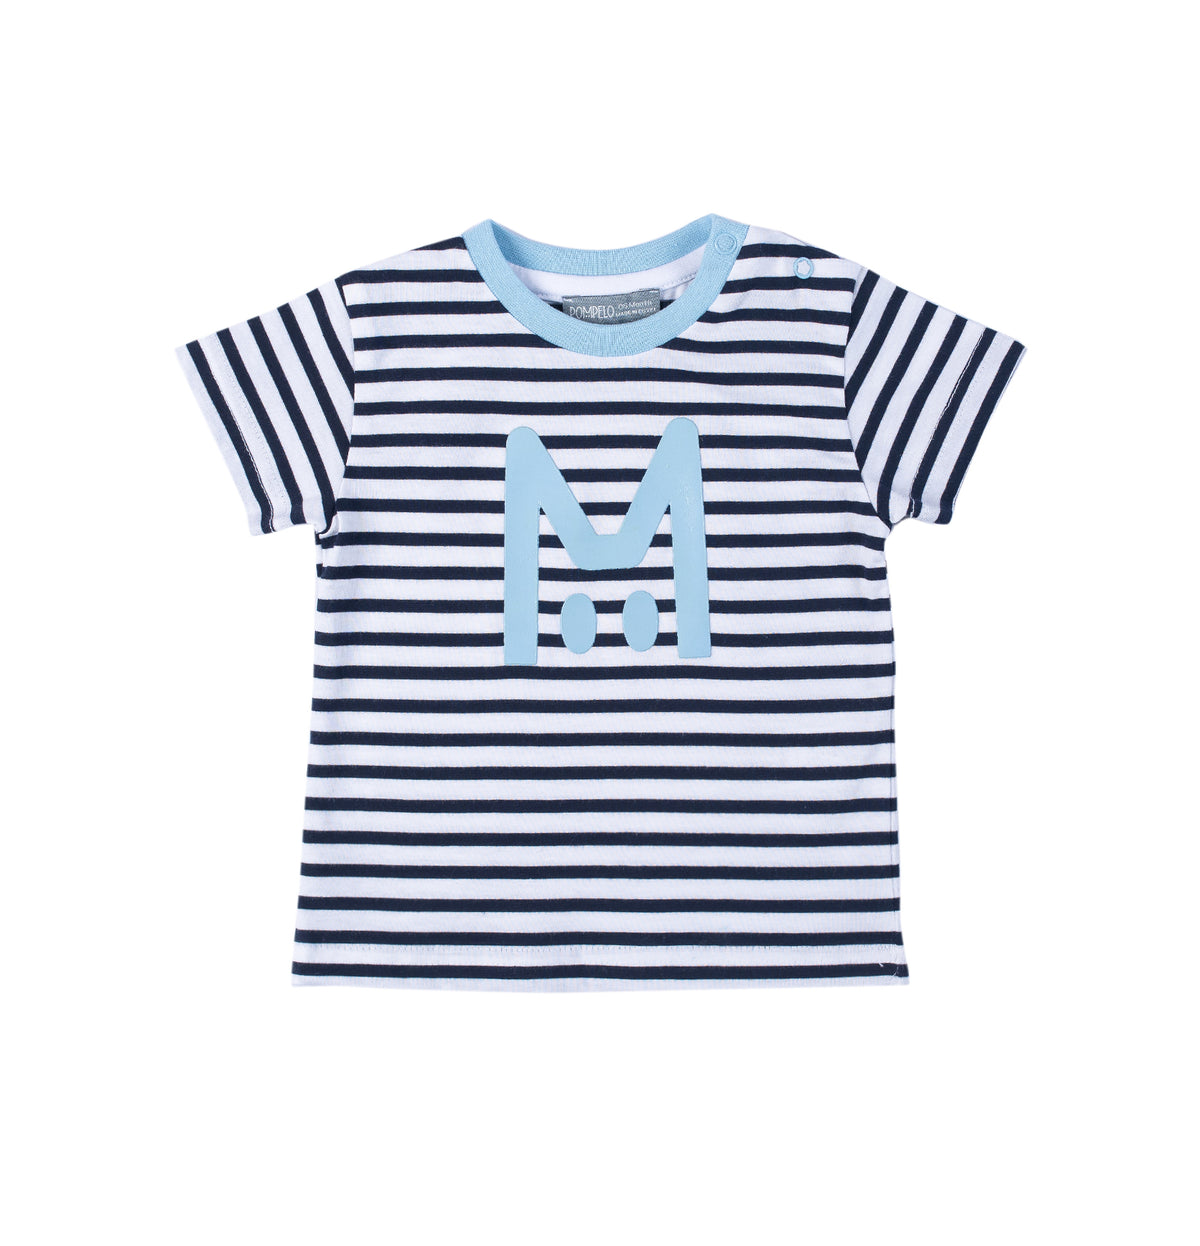 Boy stylish striped shirt by Pompelo